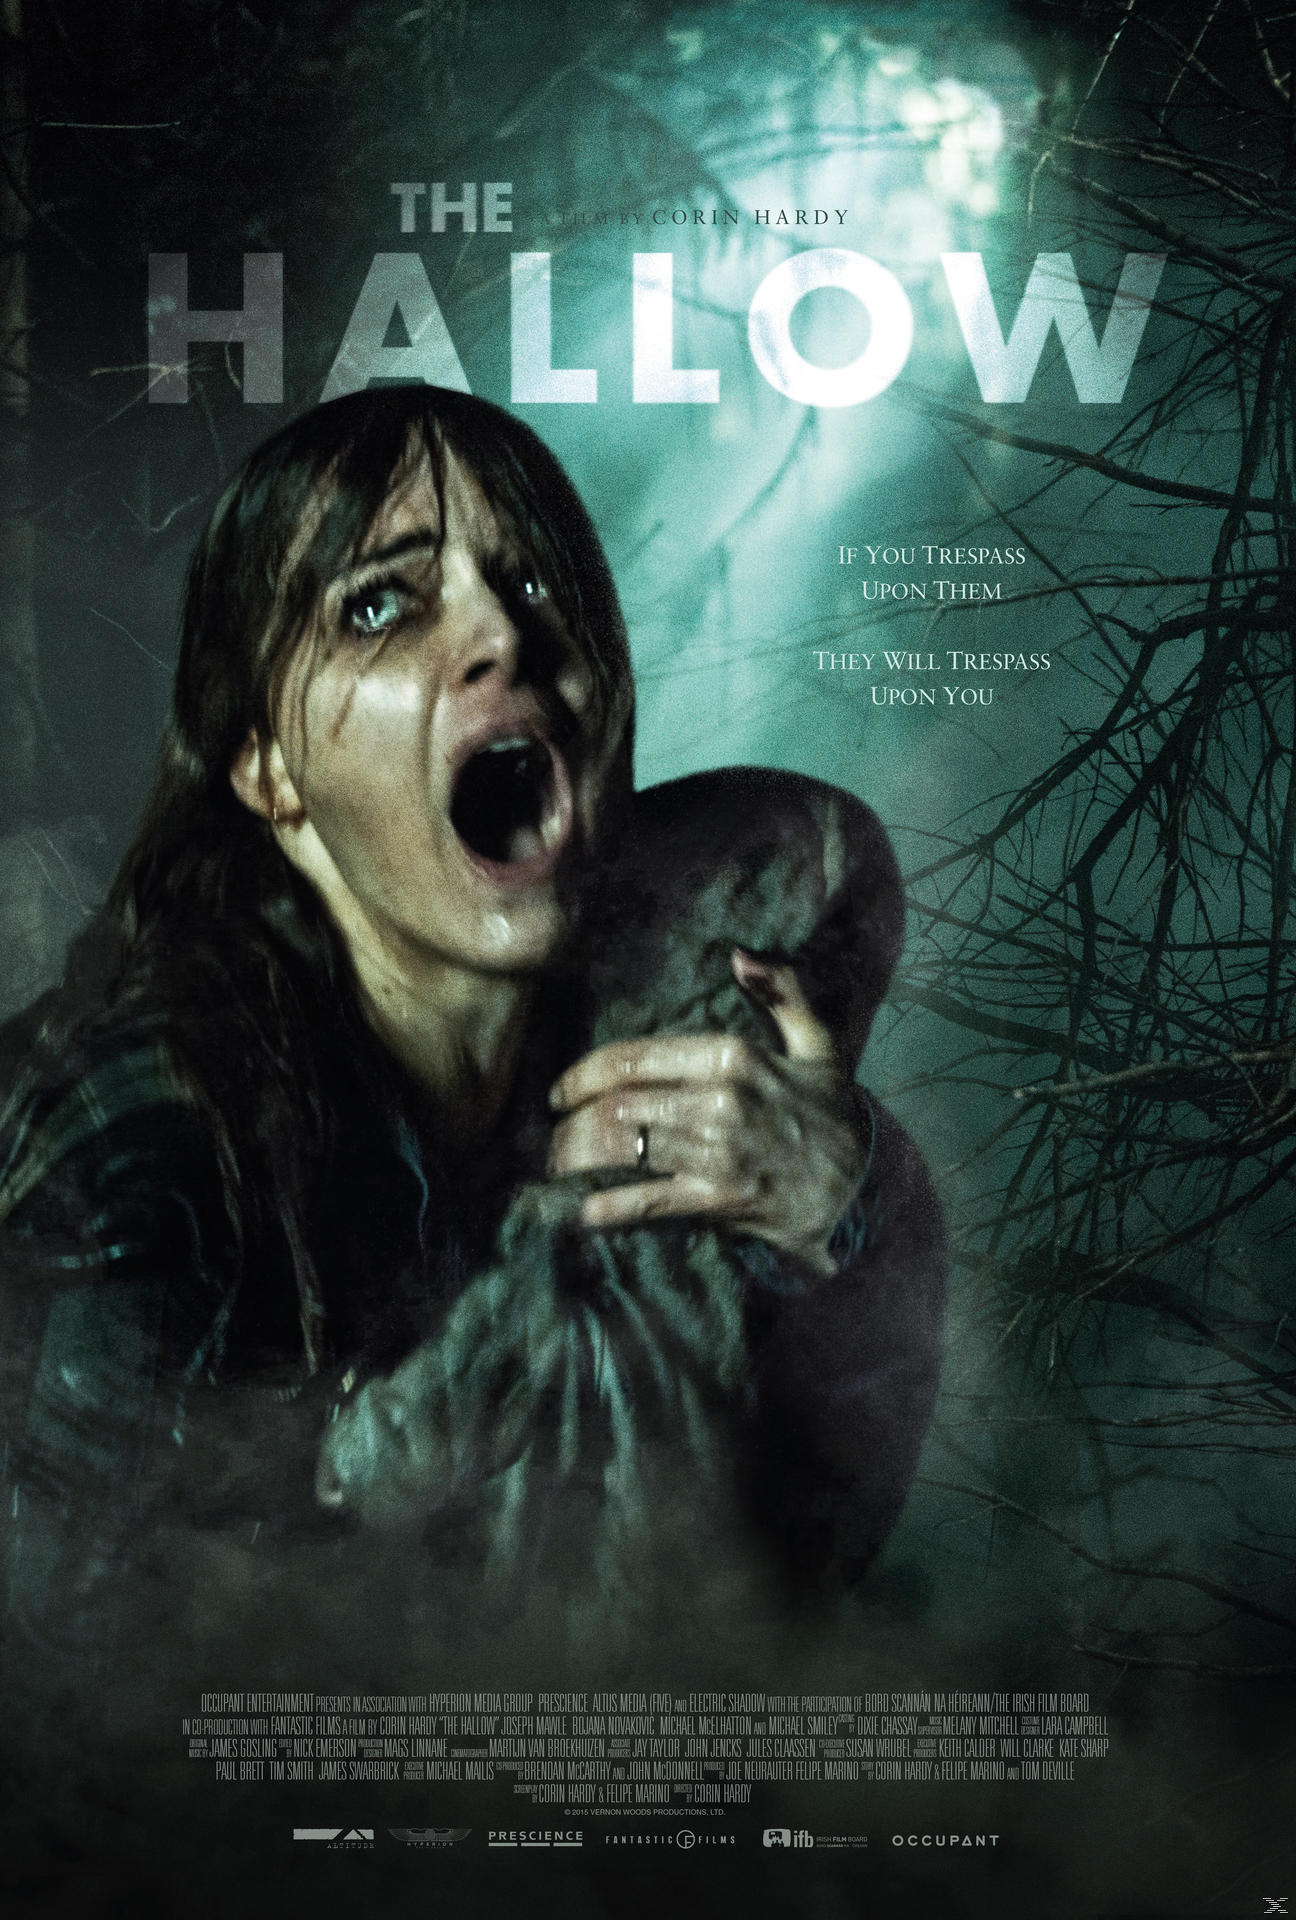 The Hallow Blu-ray